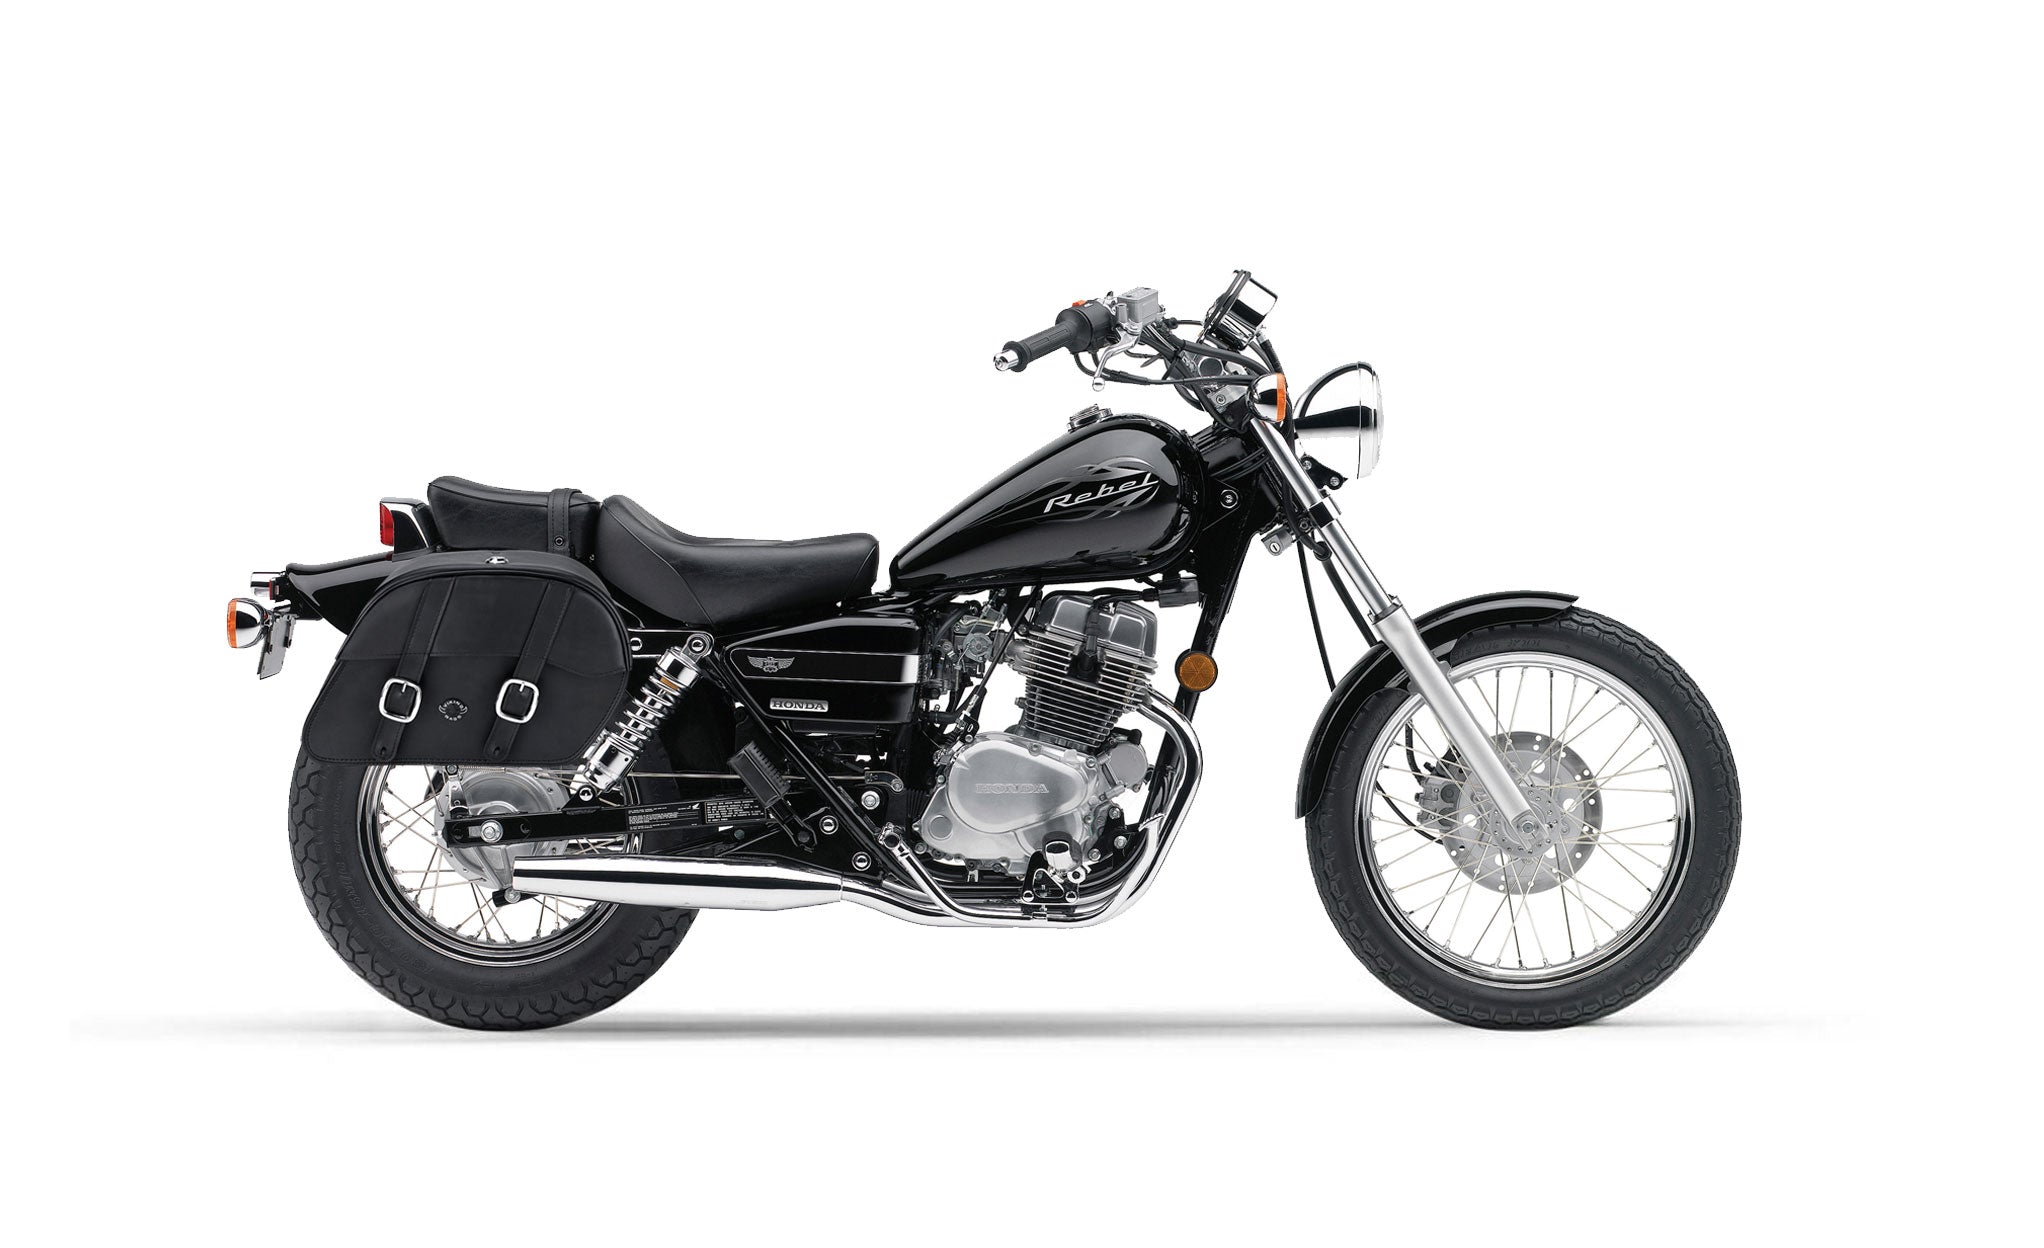 Viking Skarner Medium Lockable Honda Rebel 250 Leather Motorcycle Saddlebags on Bike Photo @expand